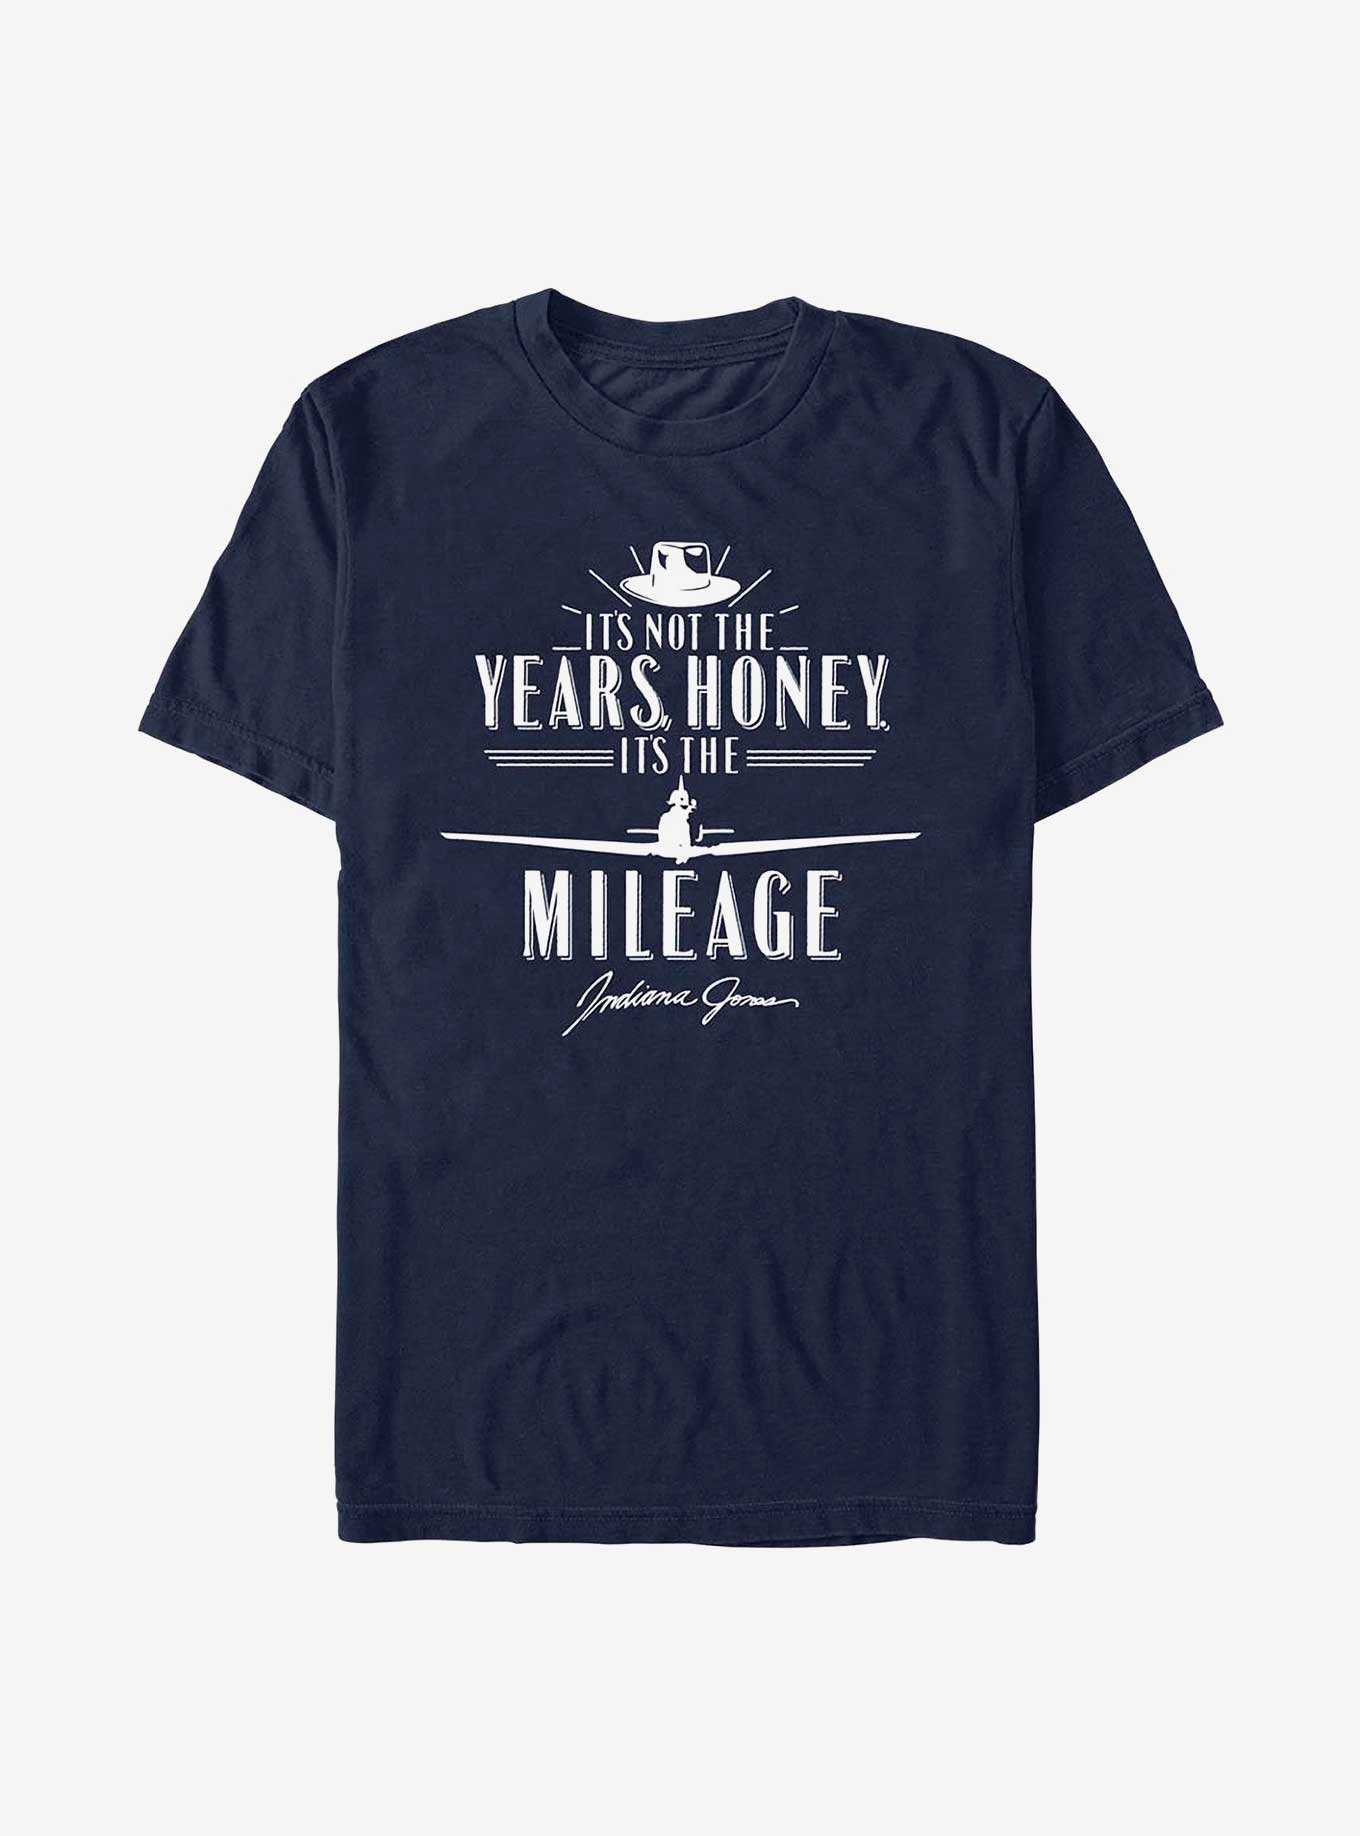 Indiana Jones It's The Mileage T-Shirt, , hi-res